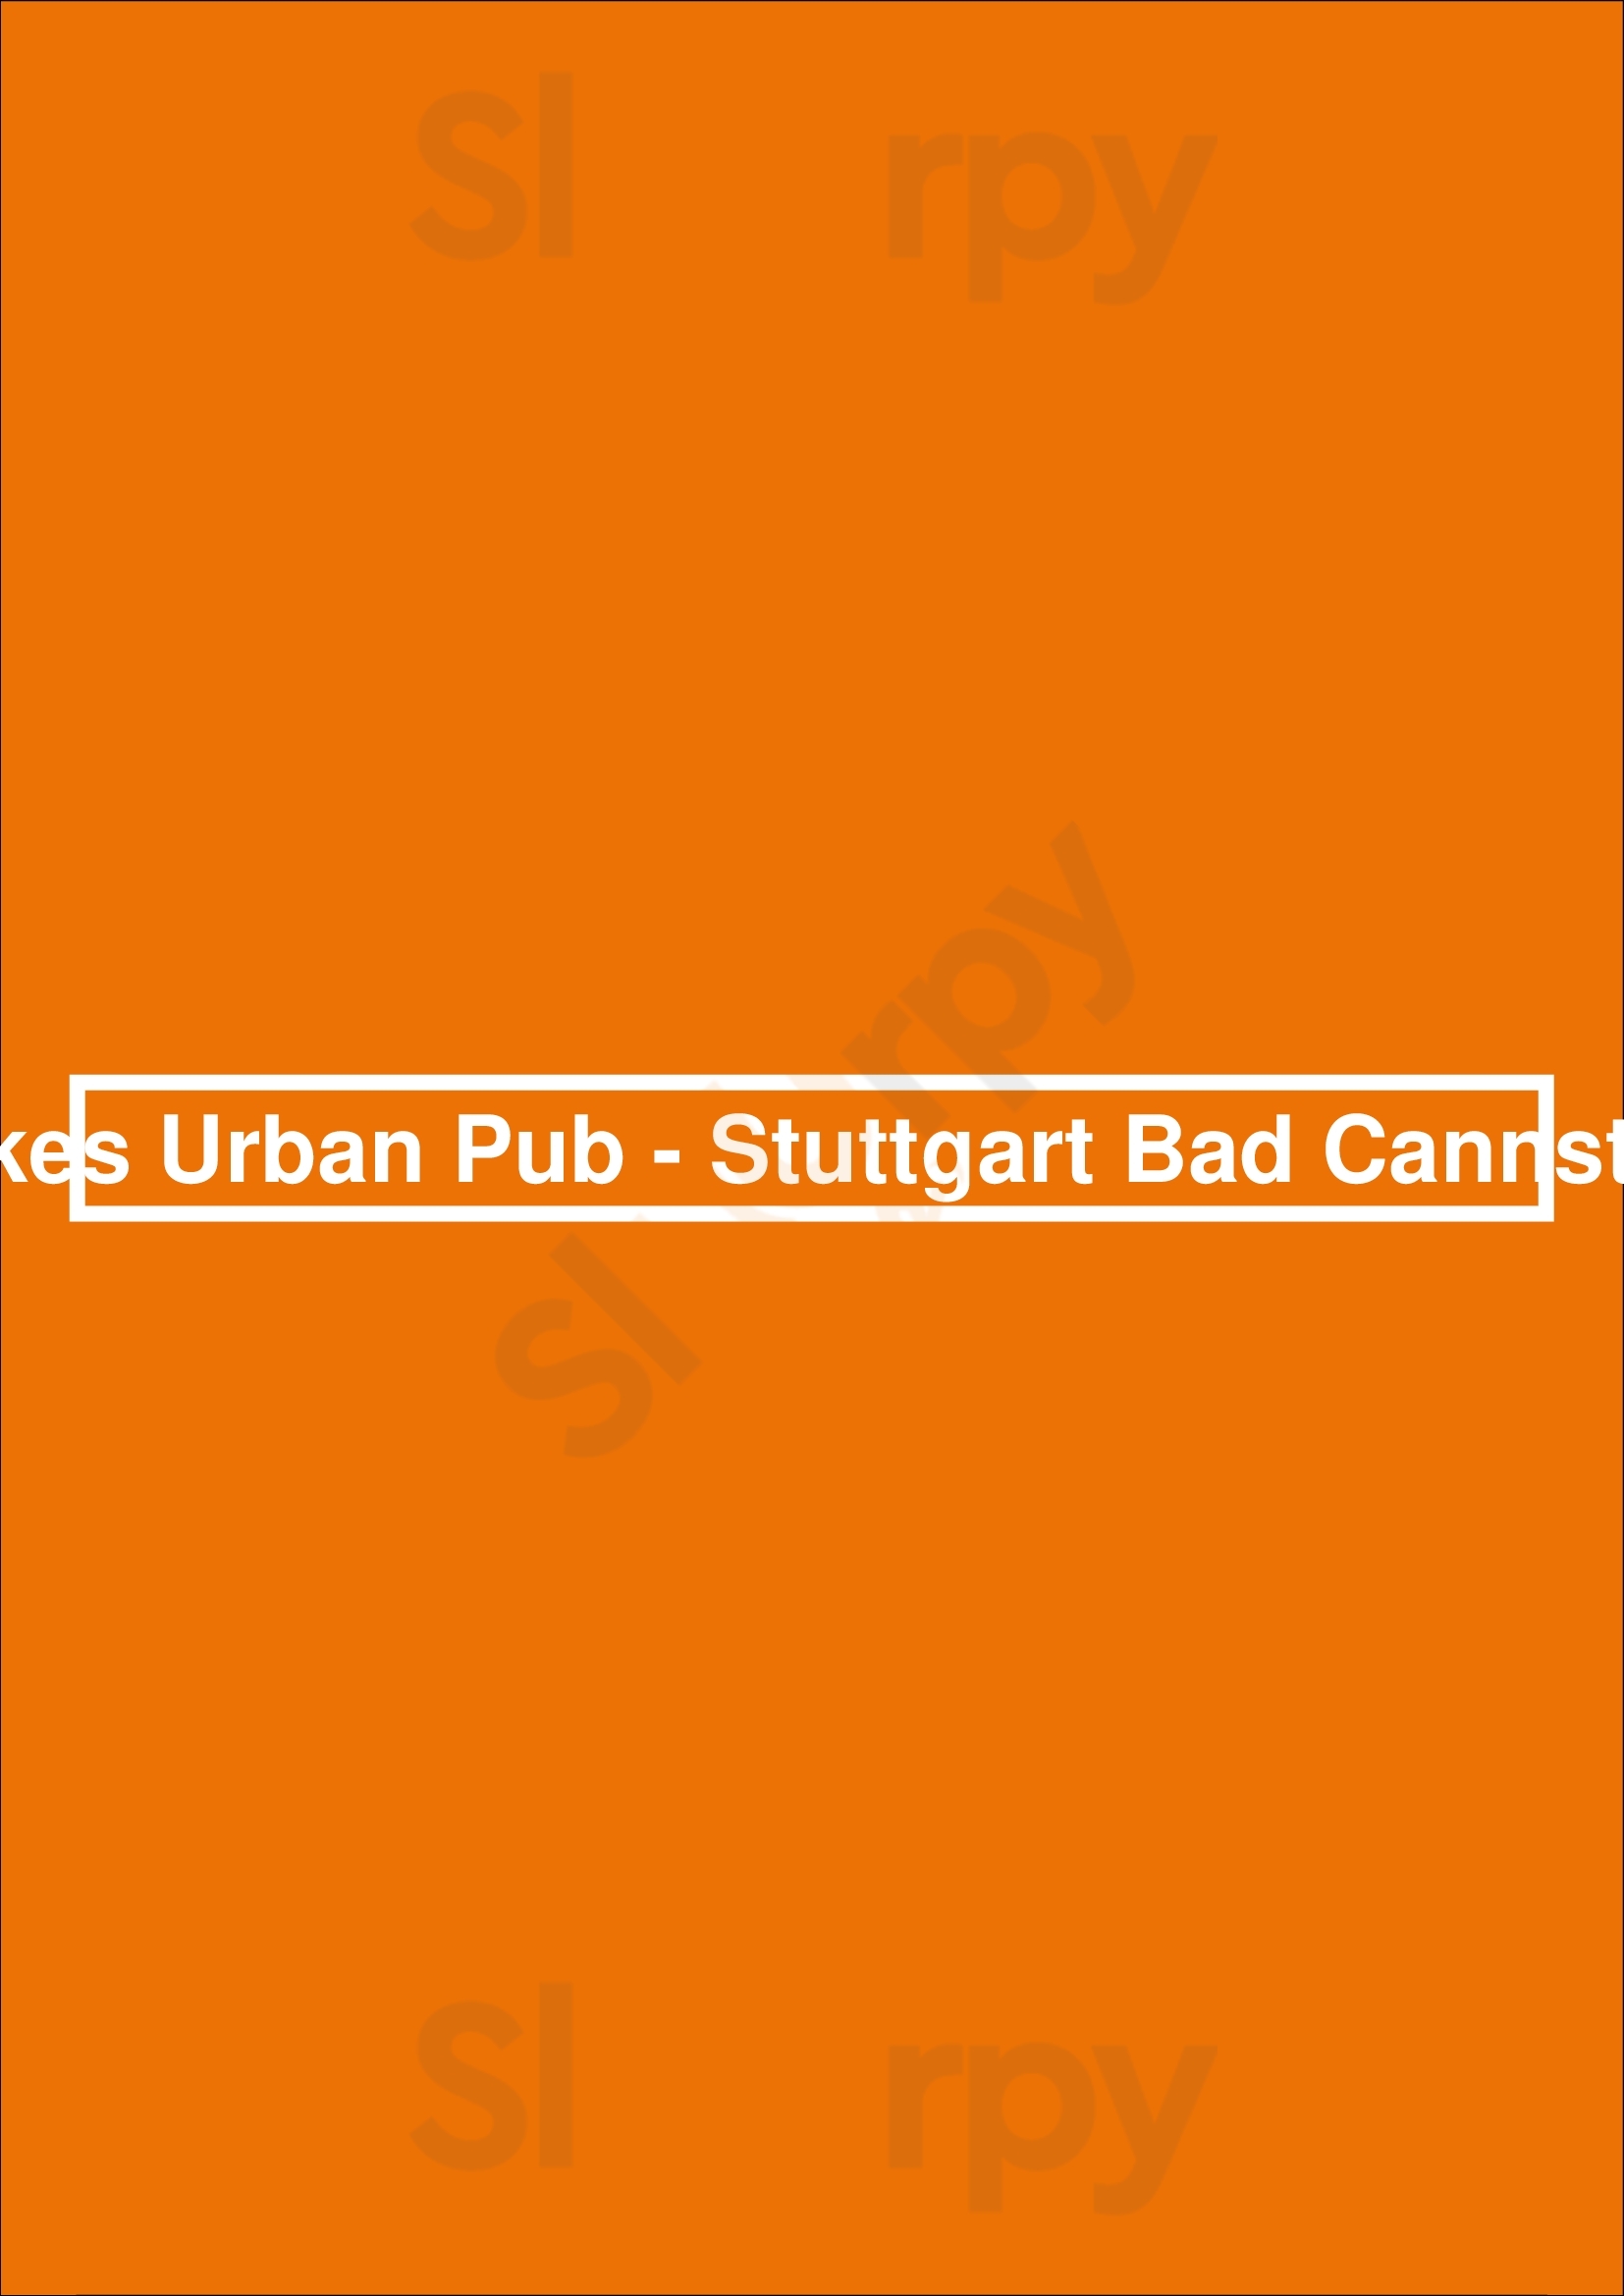 Mikes Urban Pub - Stuttgart Bad Cannstatt Stuttgart Menu - 1